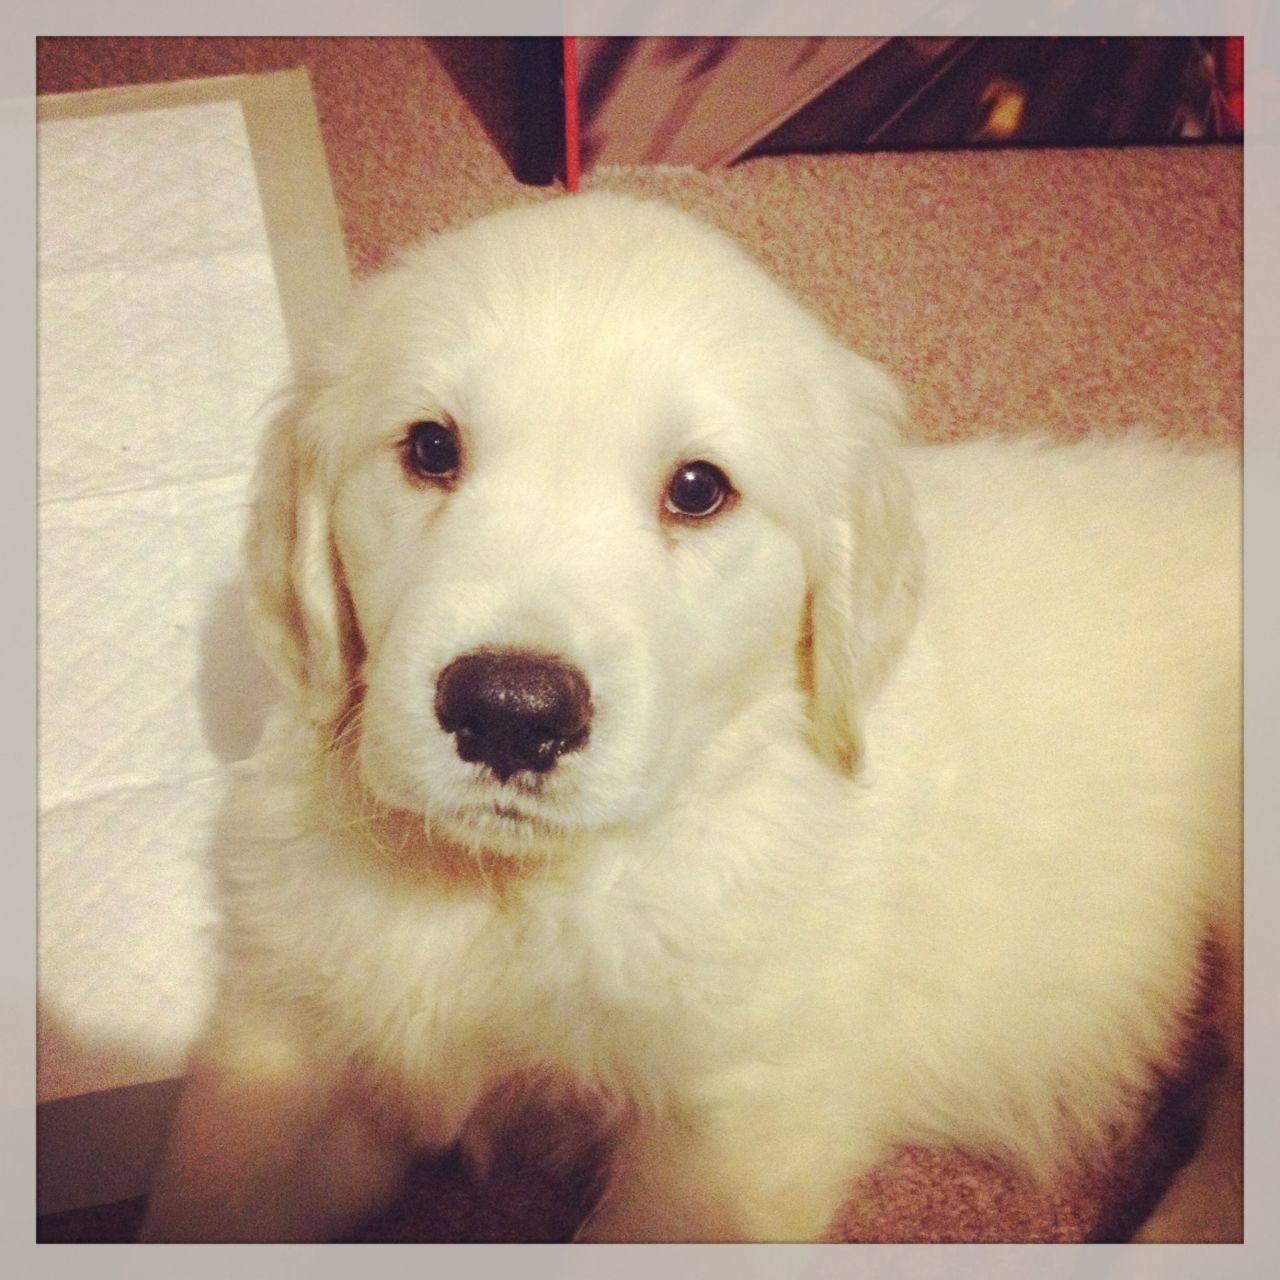 8 week old Golden Retriever Puppy for sale.